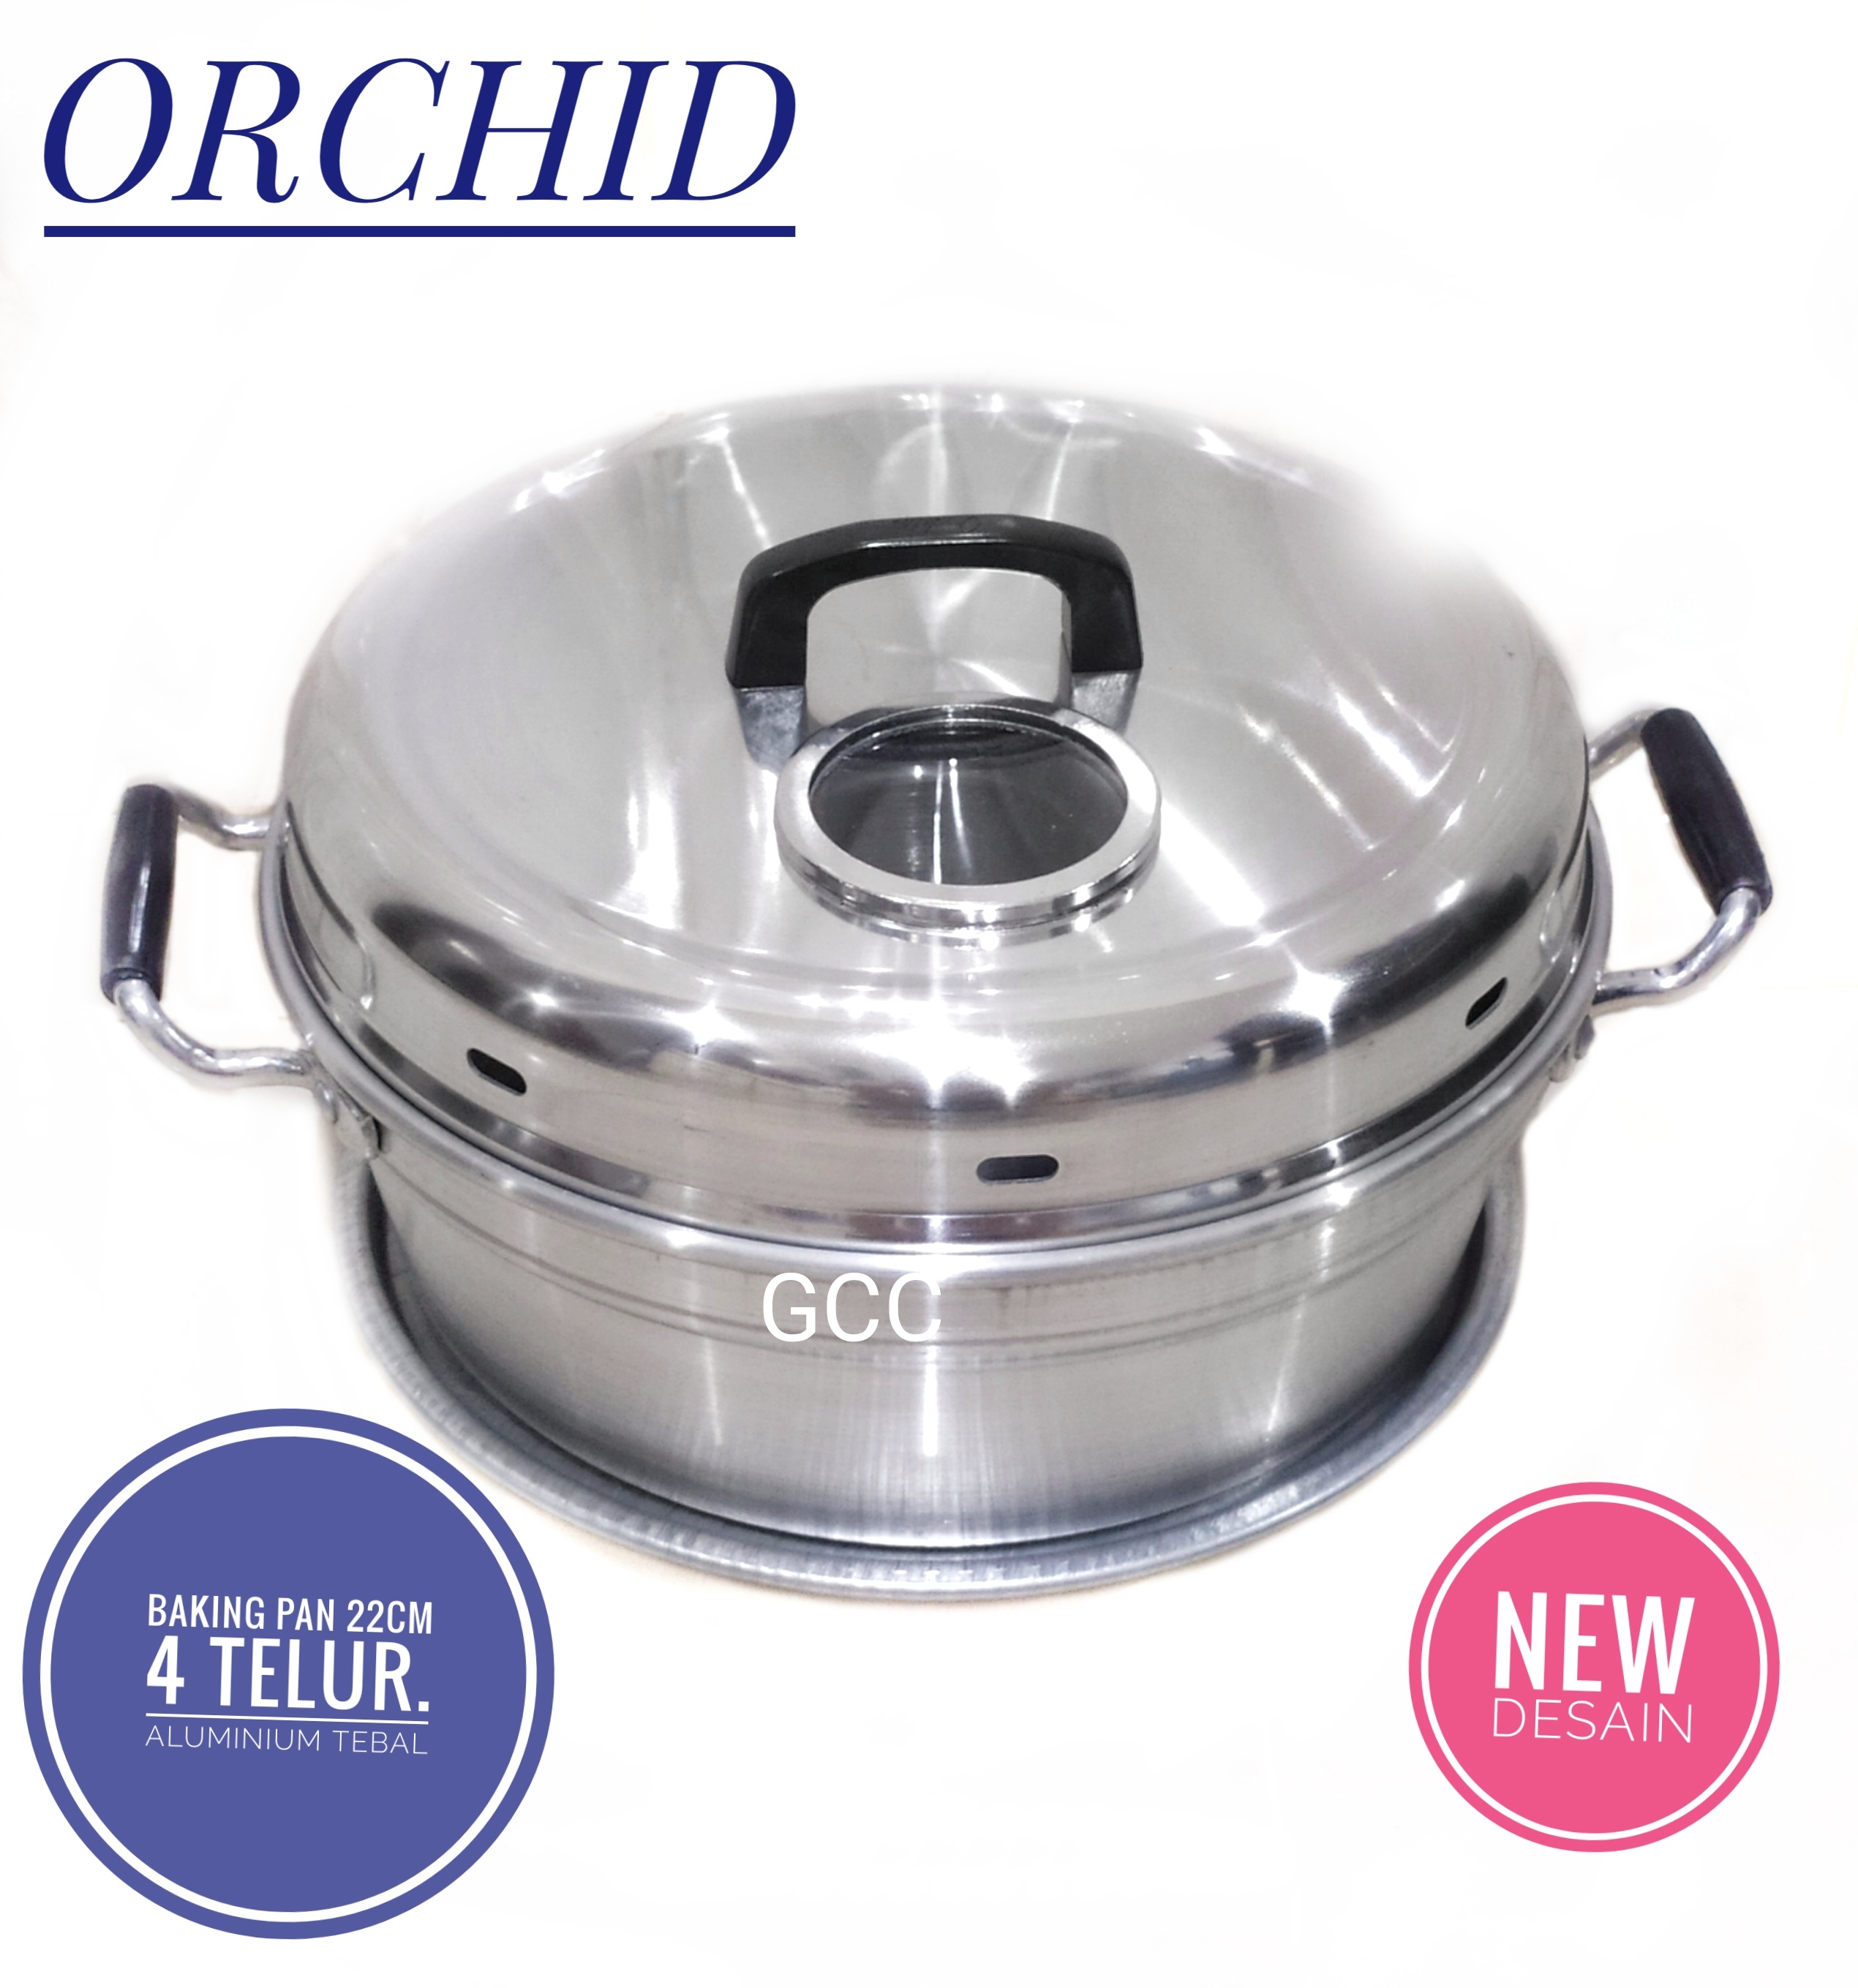 4 Telur Best Seller Orchid Oven Buat Kue Bolu Serbaguna Baking Pan Panggangan Kue 22cm Model Pegangan Diatas Lazada Indonesia